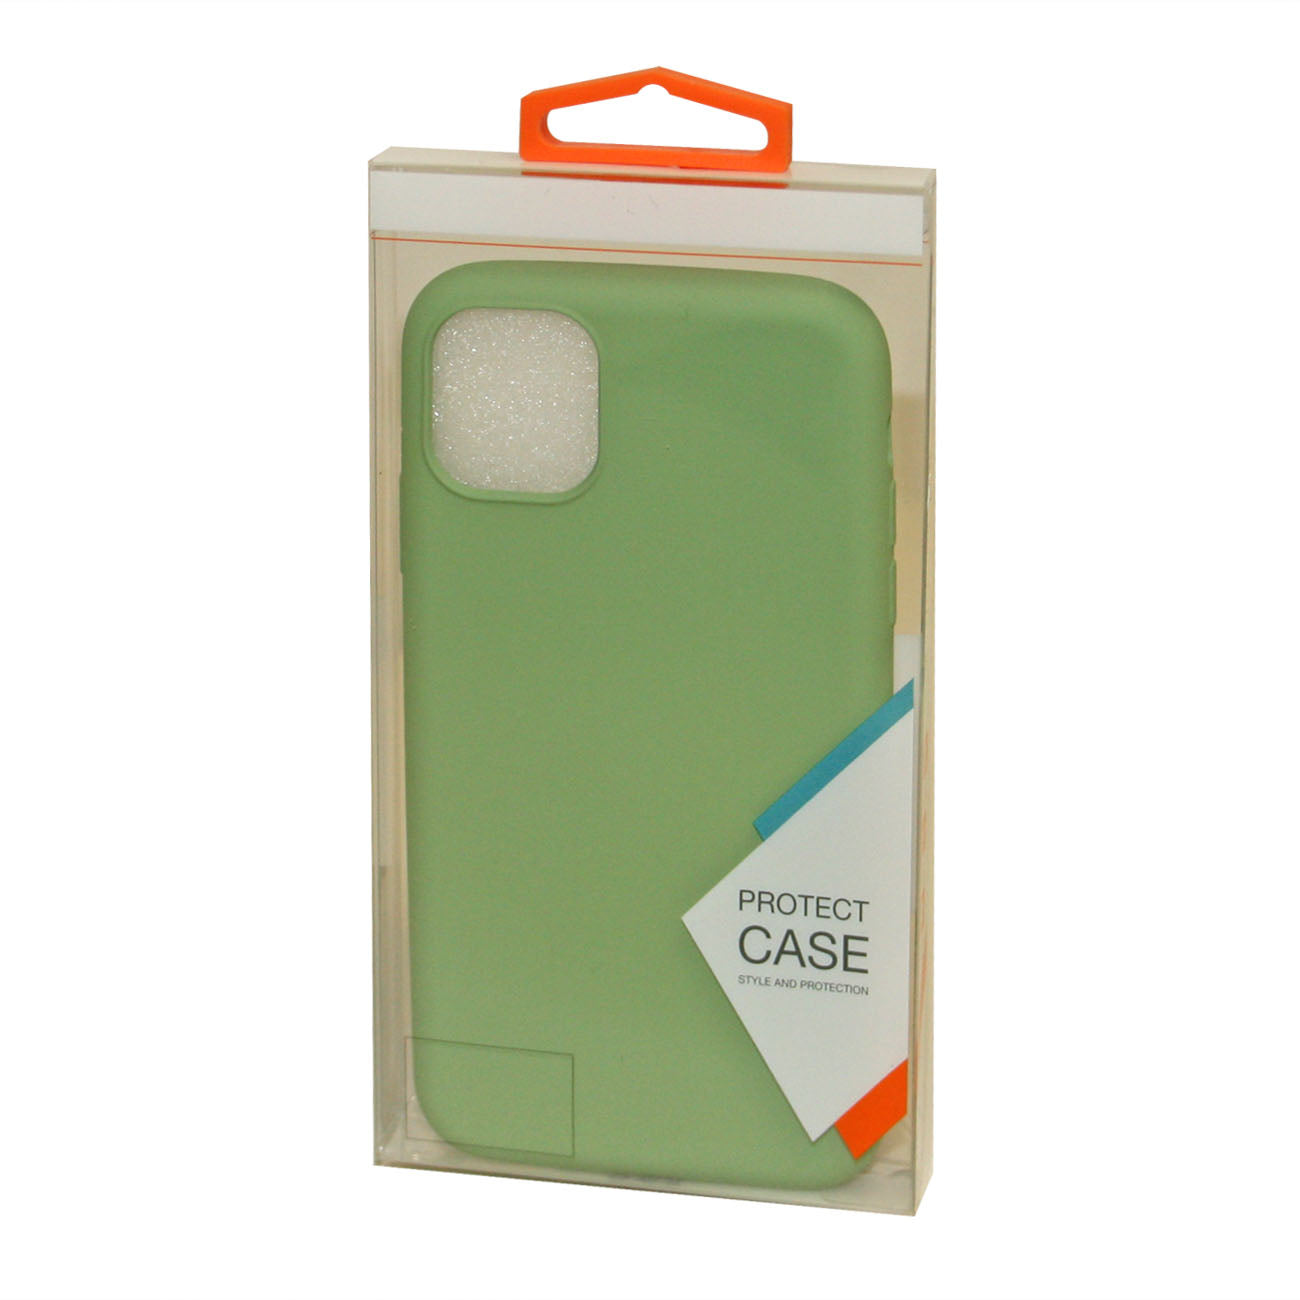 Reiko Apple iPhone 11 Pro Gummy Cases In Green